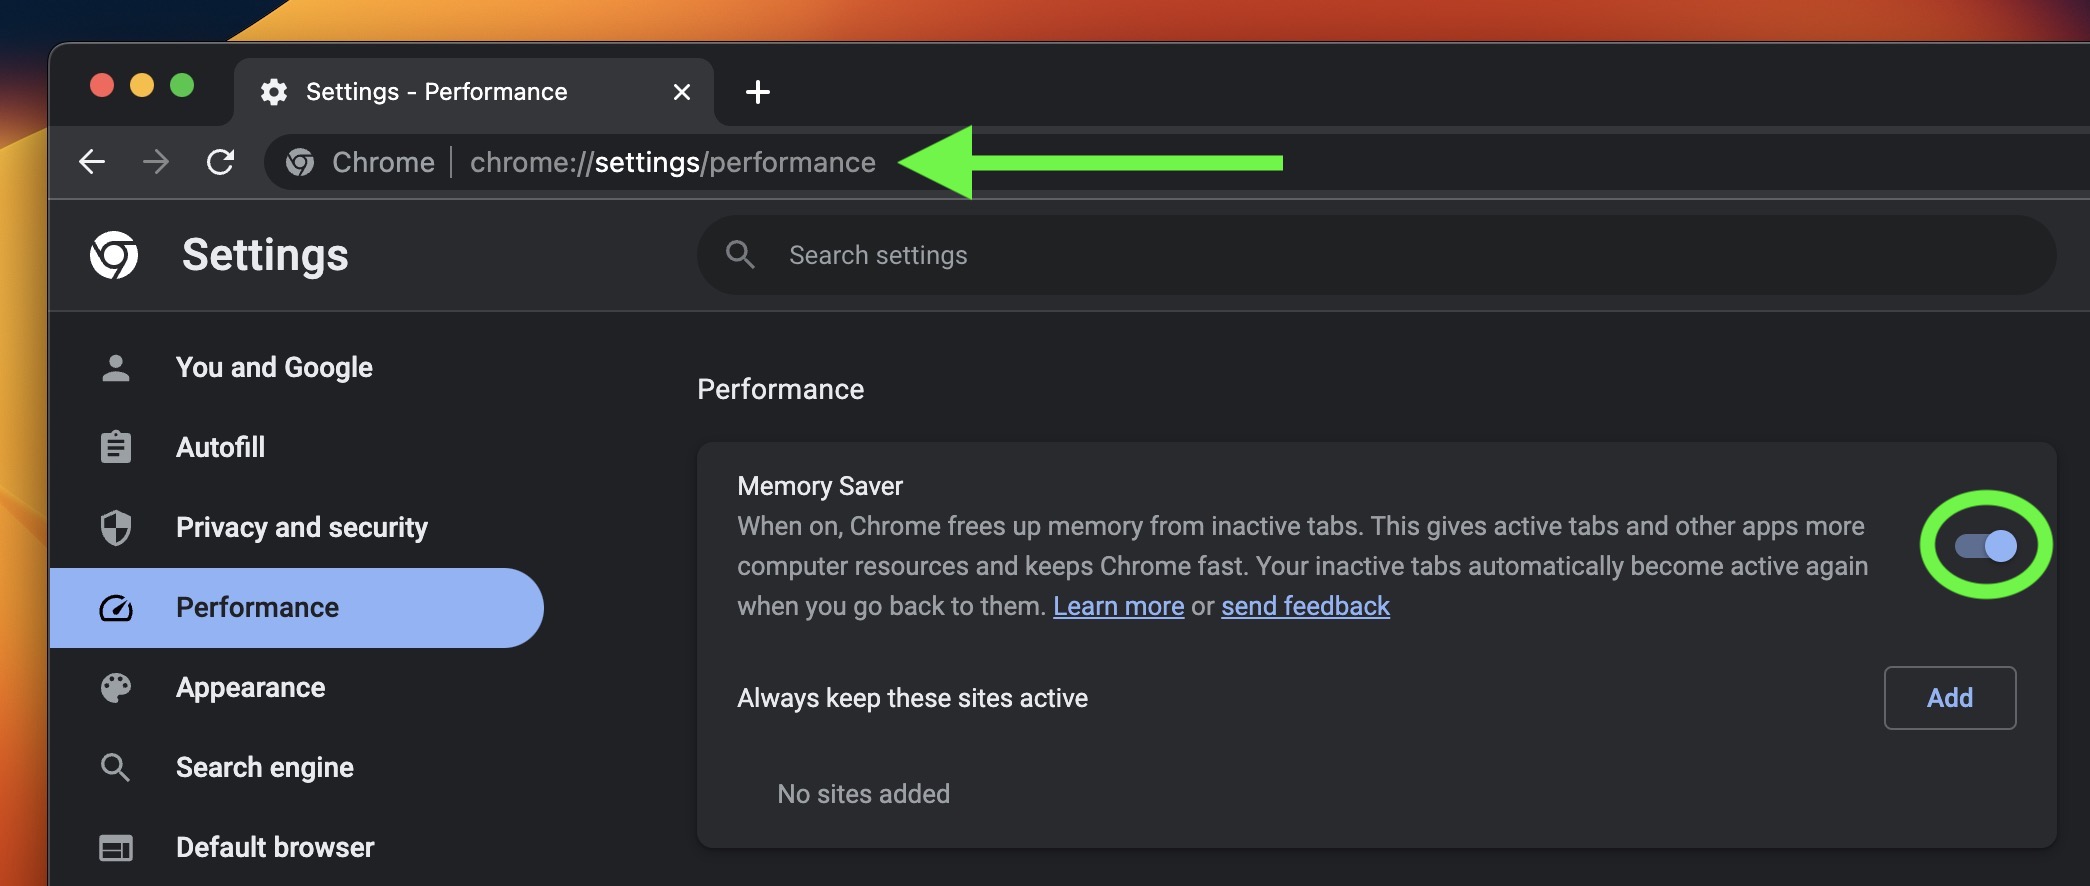 How To Make Chrome Use Less Memory